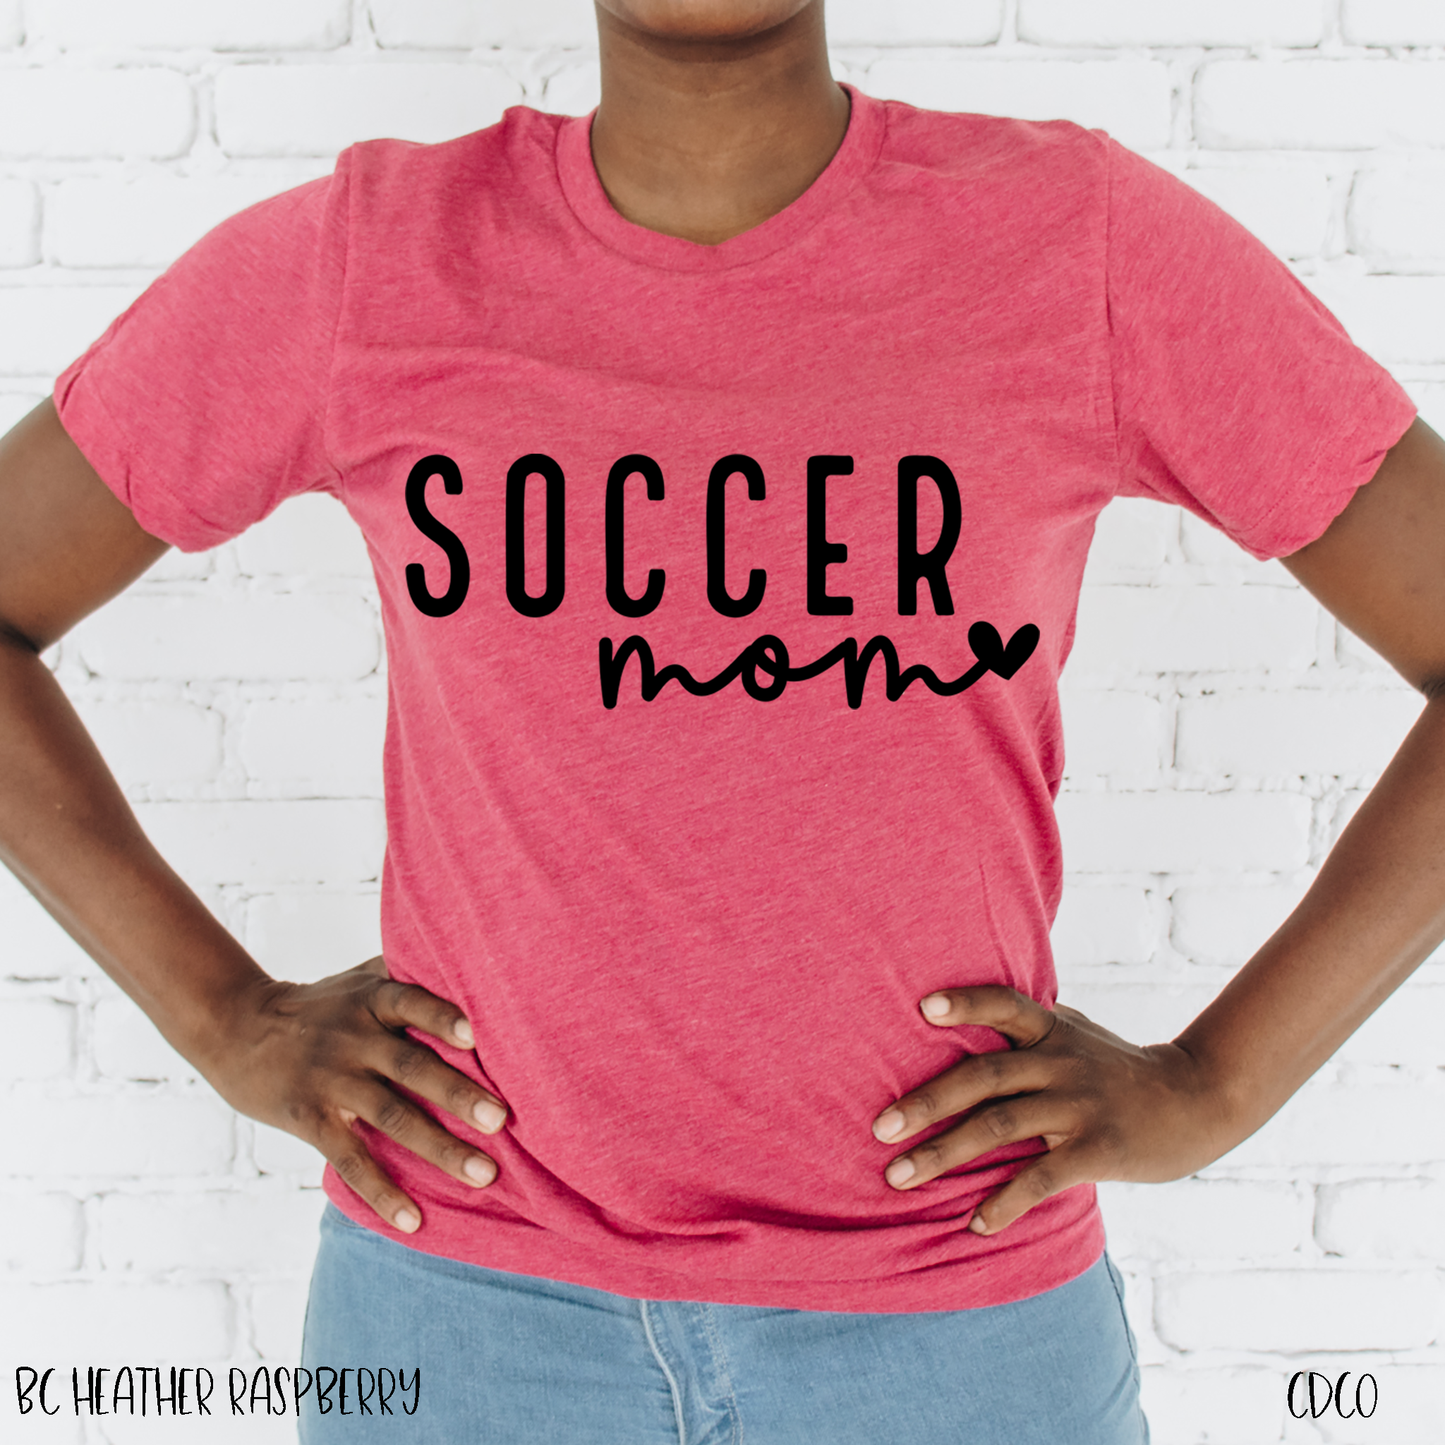 Soccer Mom (325°)